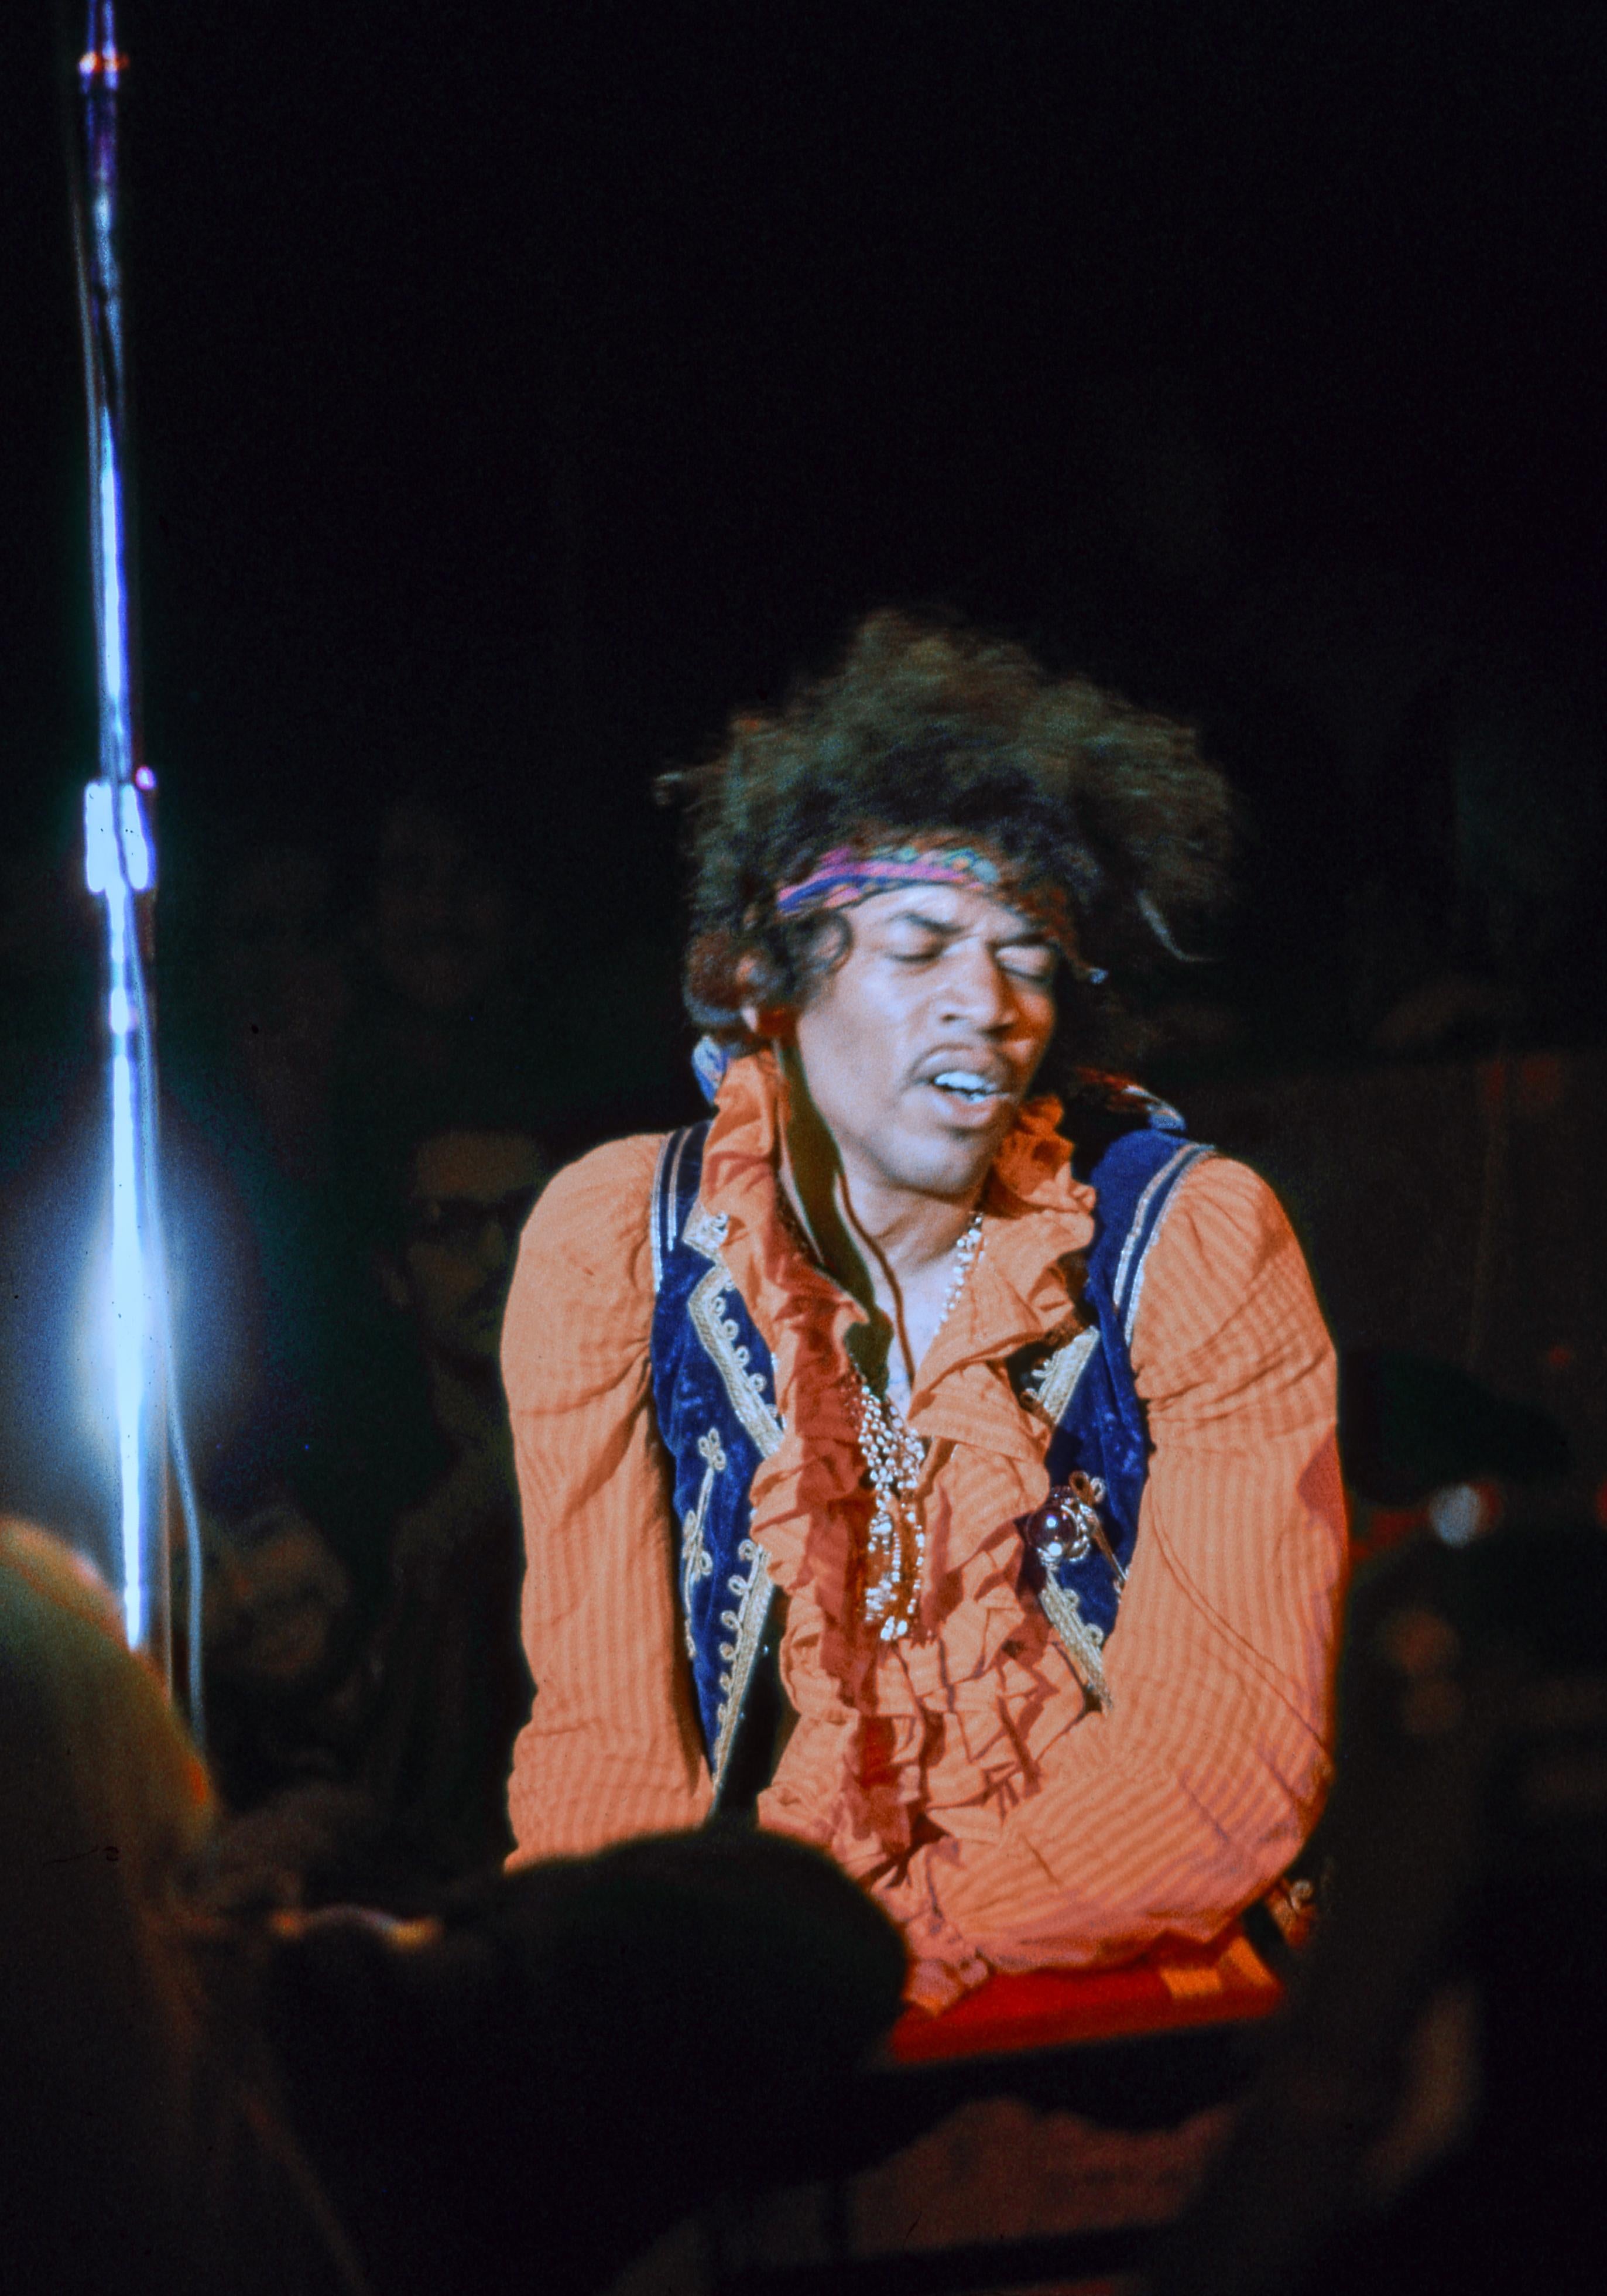 Jill Gibson Portrait Photograph - Jimi Hendrix at Monterey Pop Festival Fine Art Print